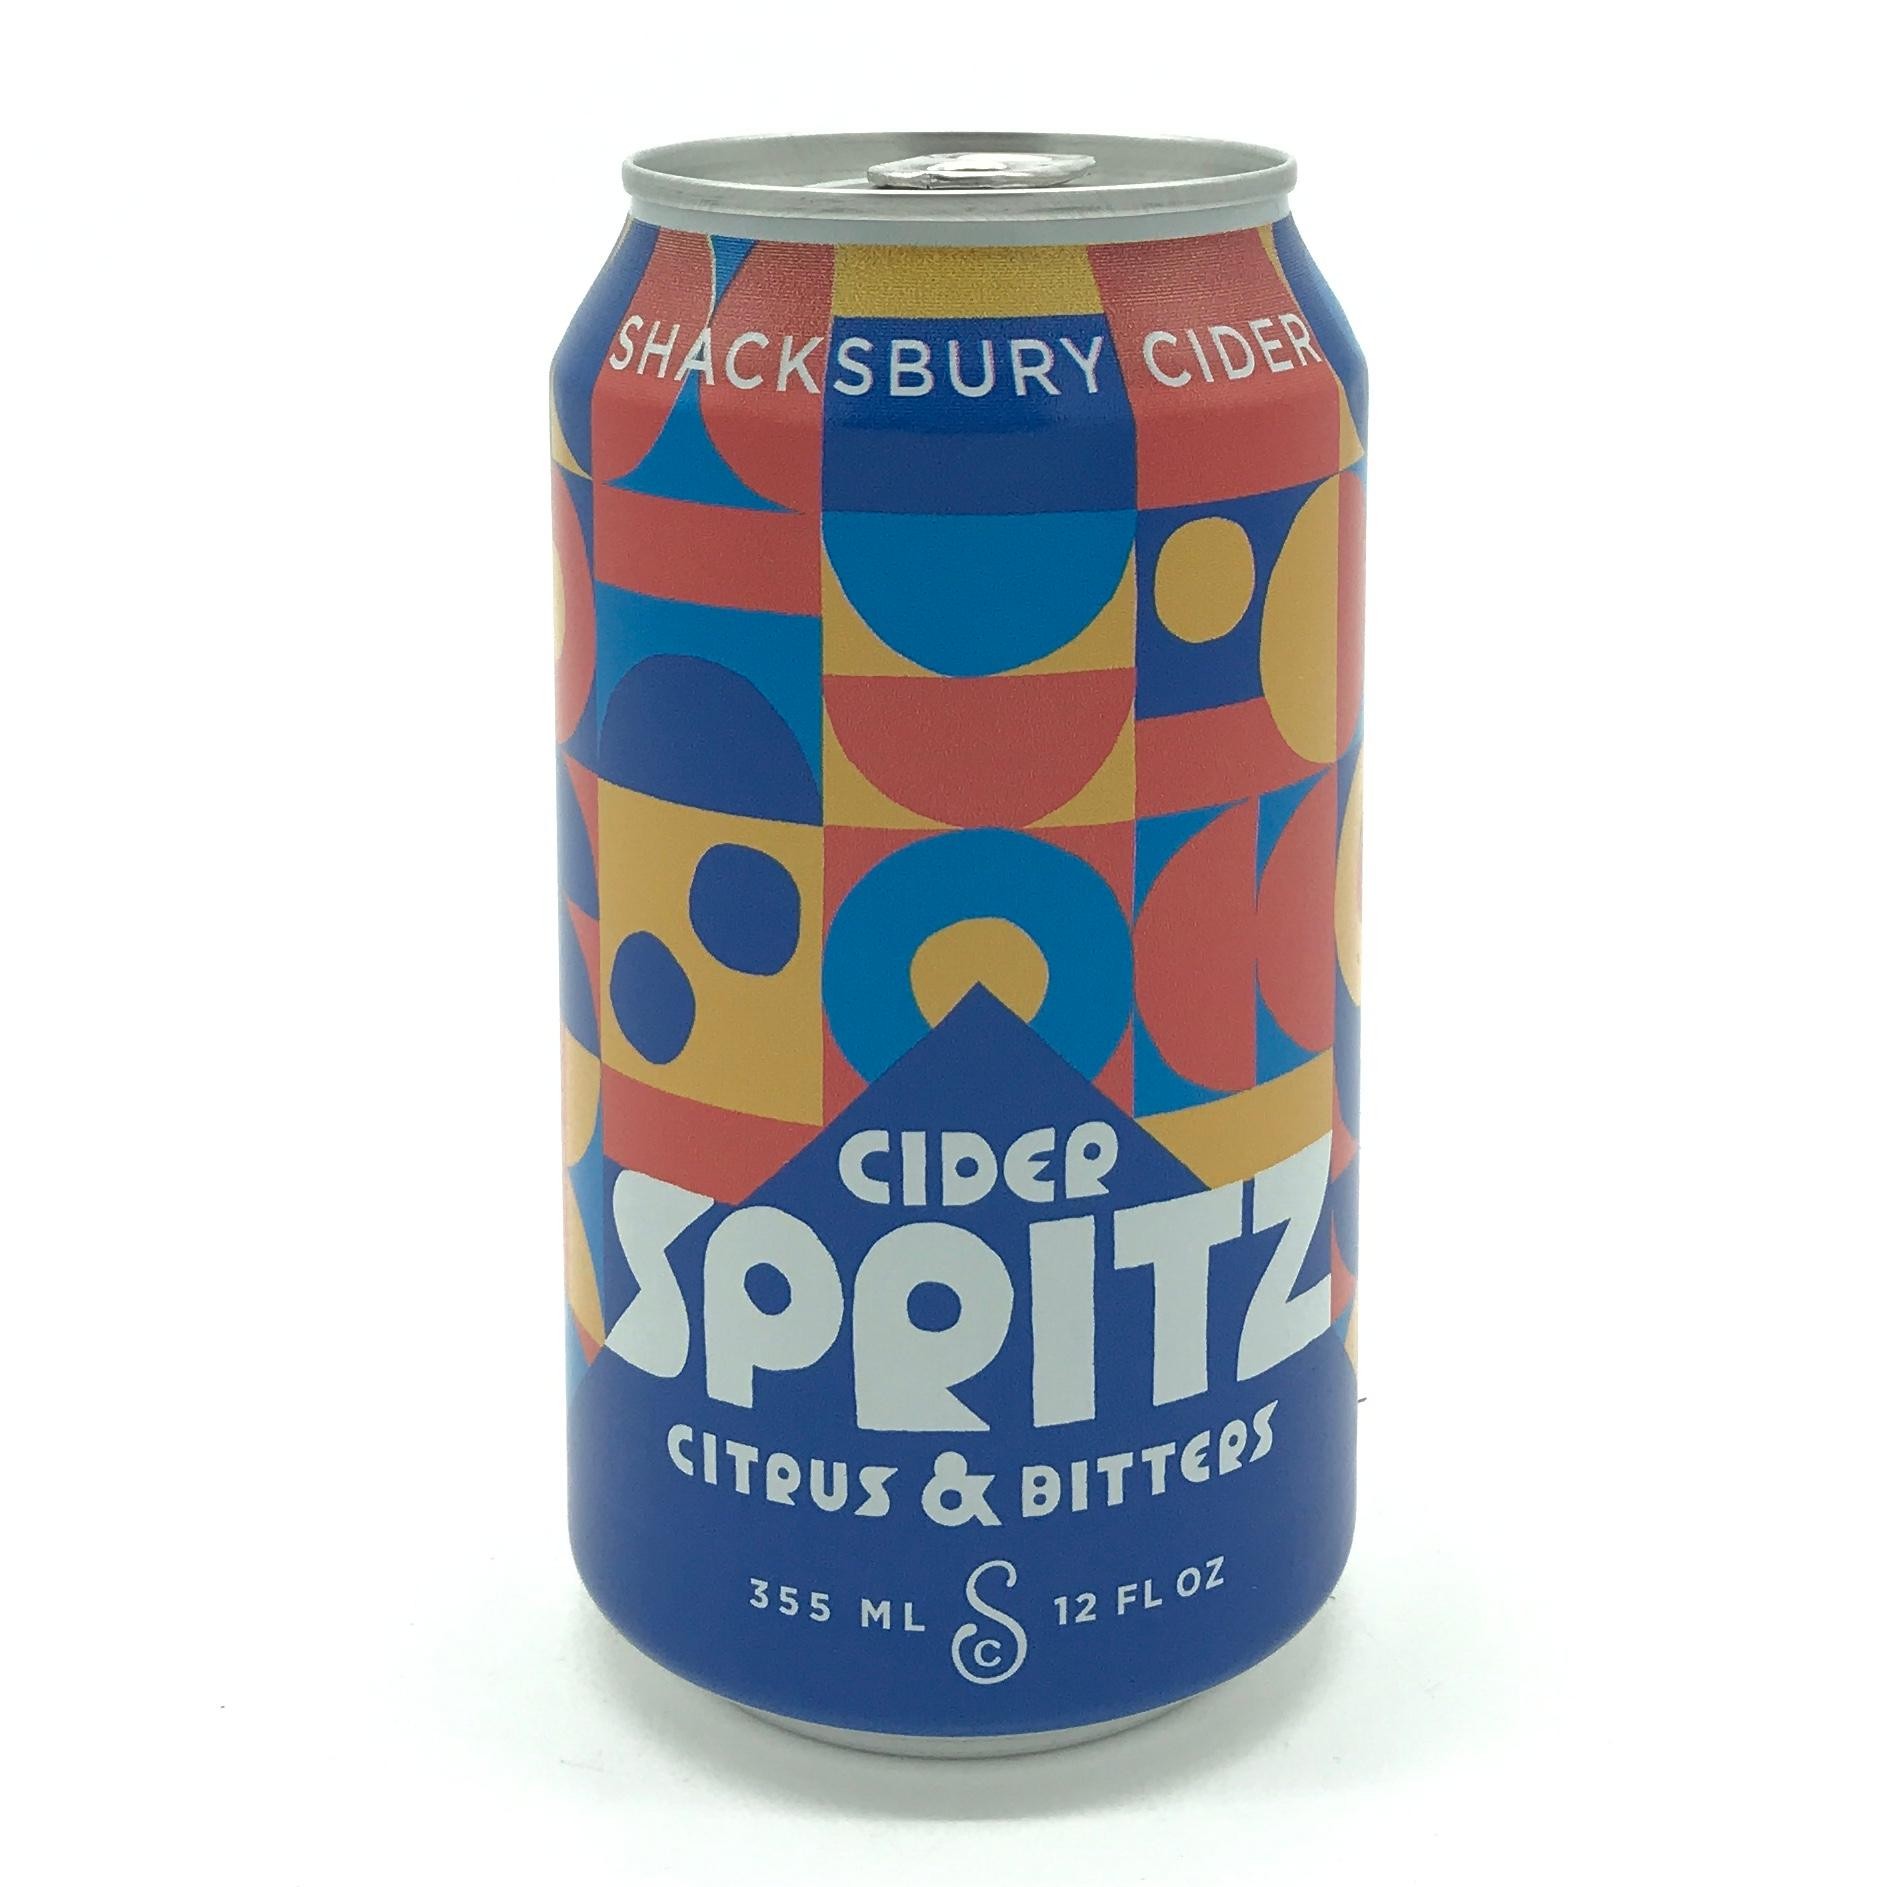 Shacksbury Cider - Cider Spritz: Citrus & Bitters